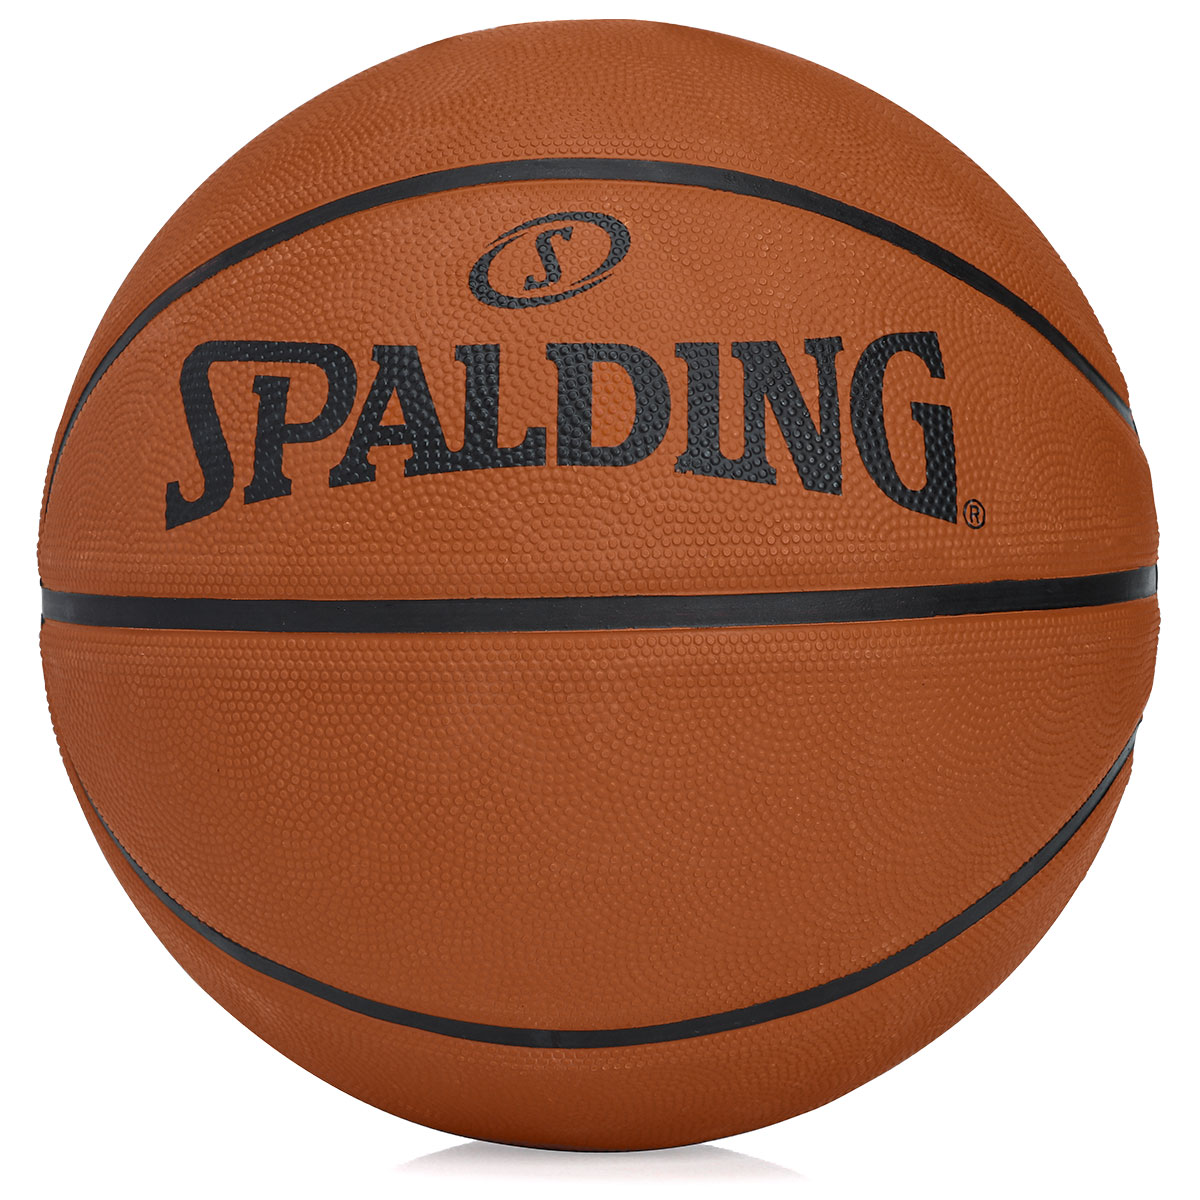 Mini Bola de Basquete Spalding Lay-up Tamanho 3 - Laranja e Preto